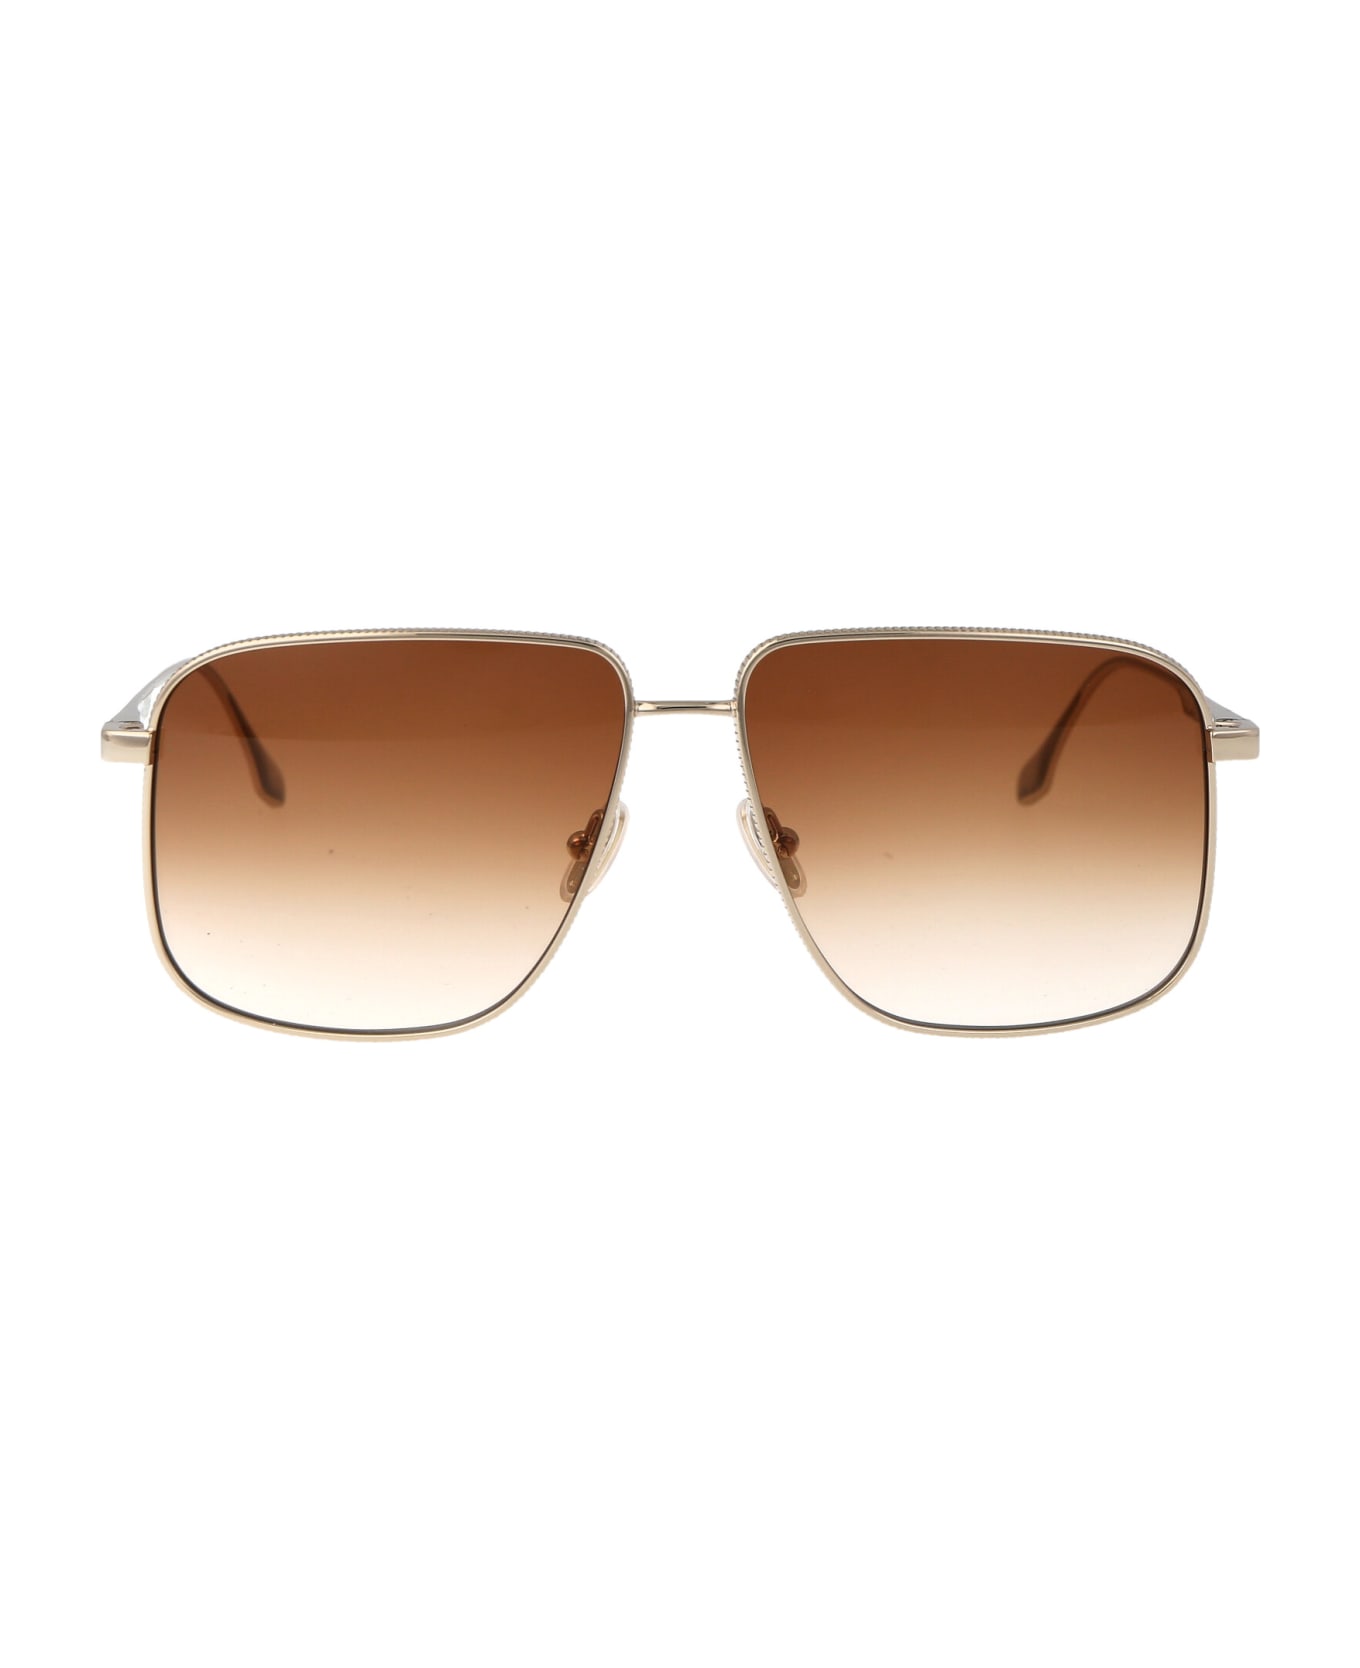 Victoria Beckham Vb243s Sunglasses - 723 GOLD/HONEY GRADIENT サングラス